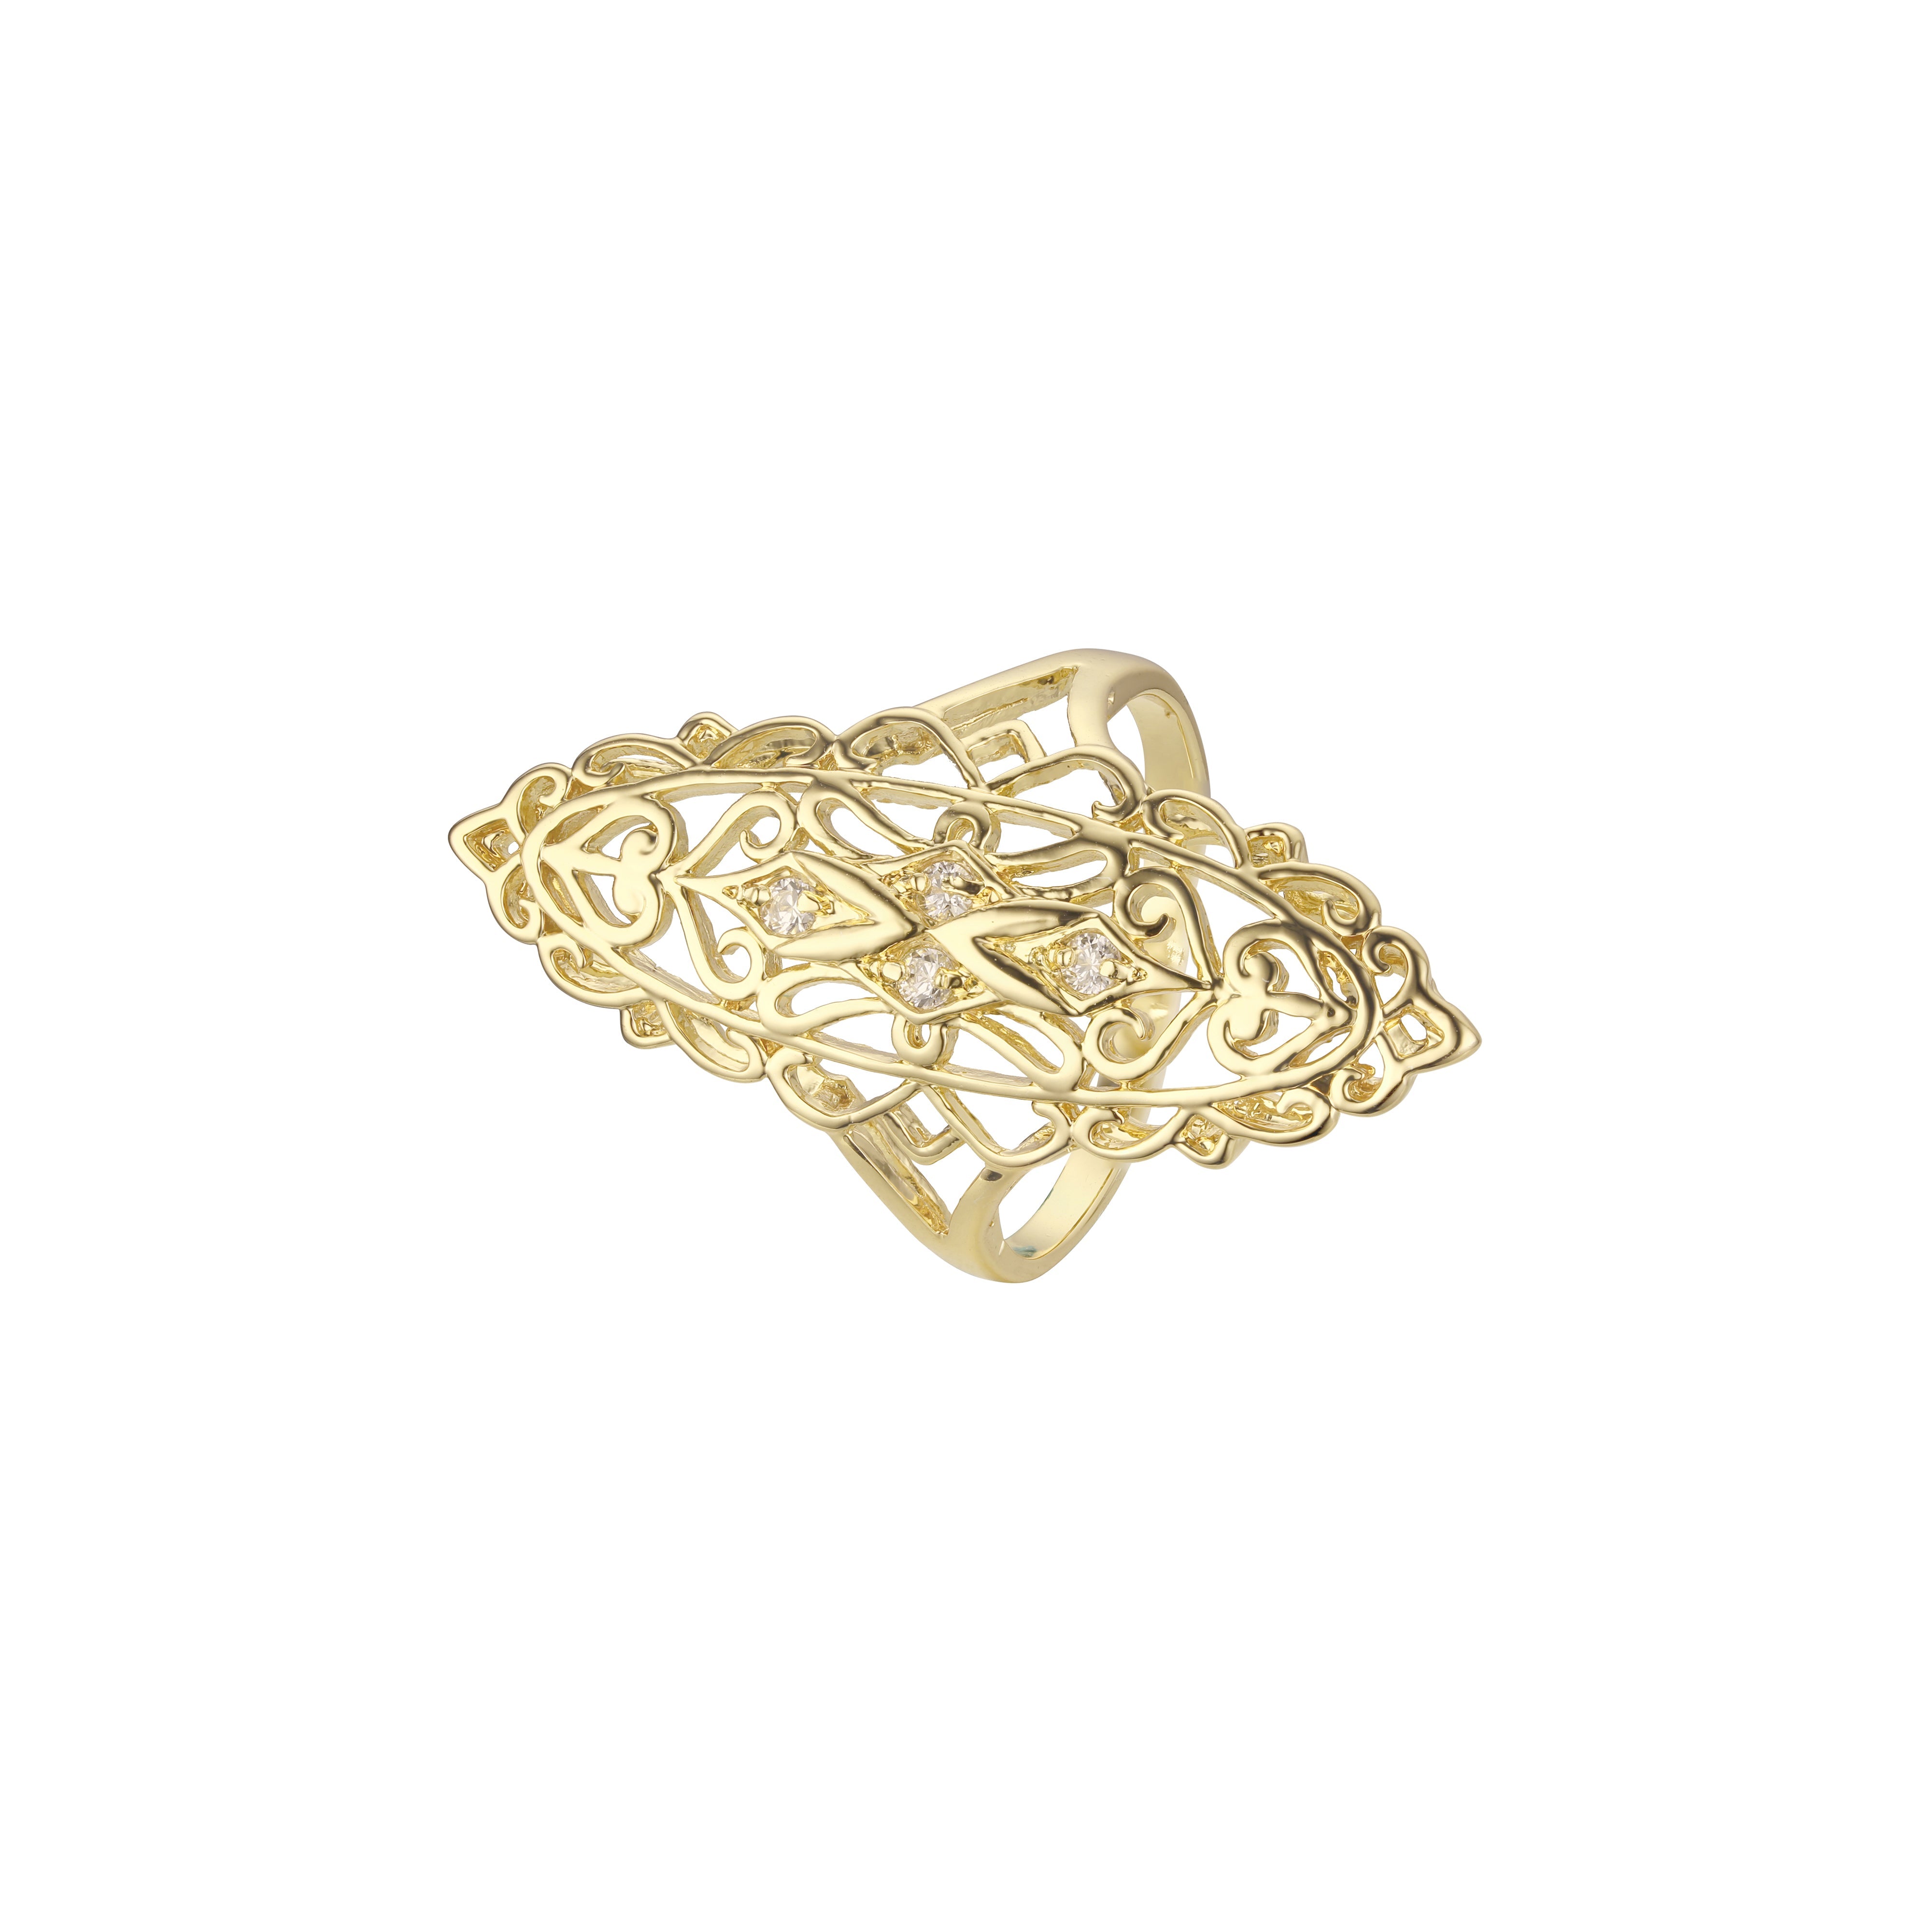 Great filigree rings in 14K Gold, Rose Gold plating colors